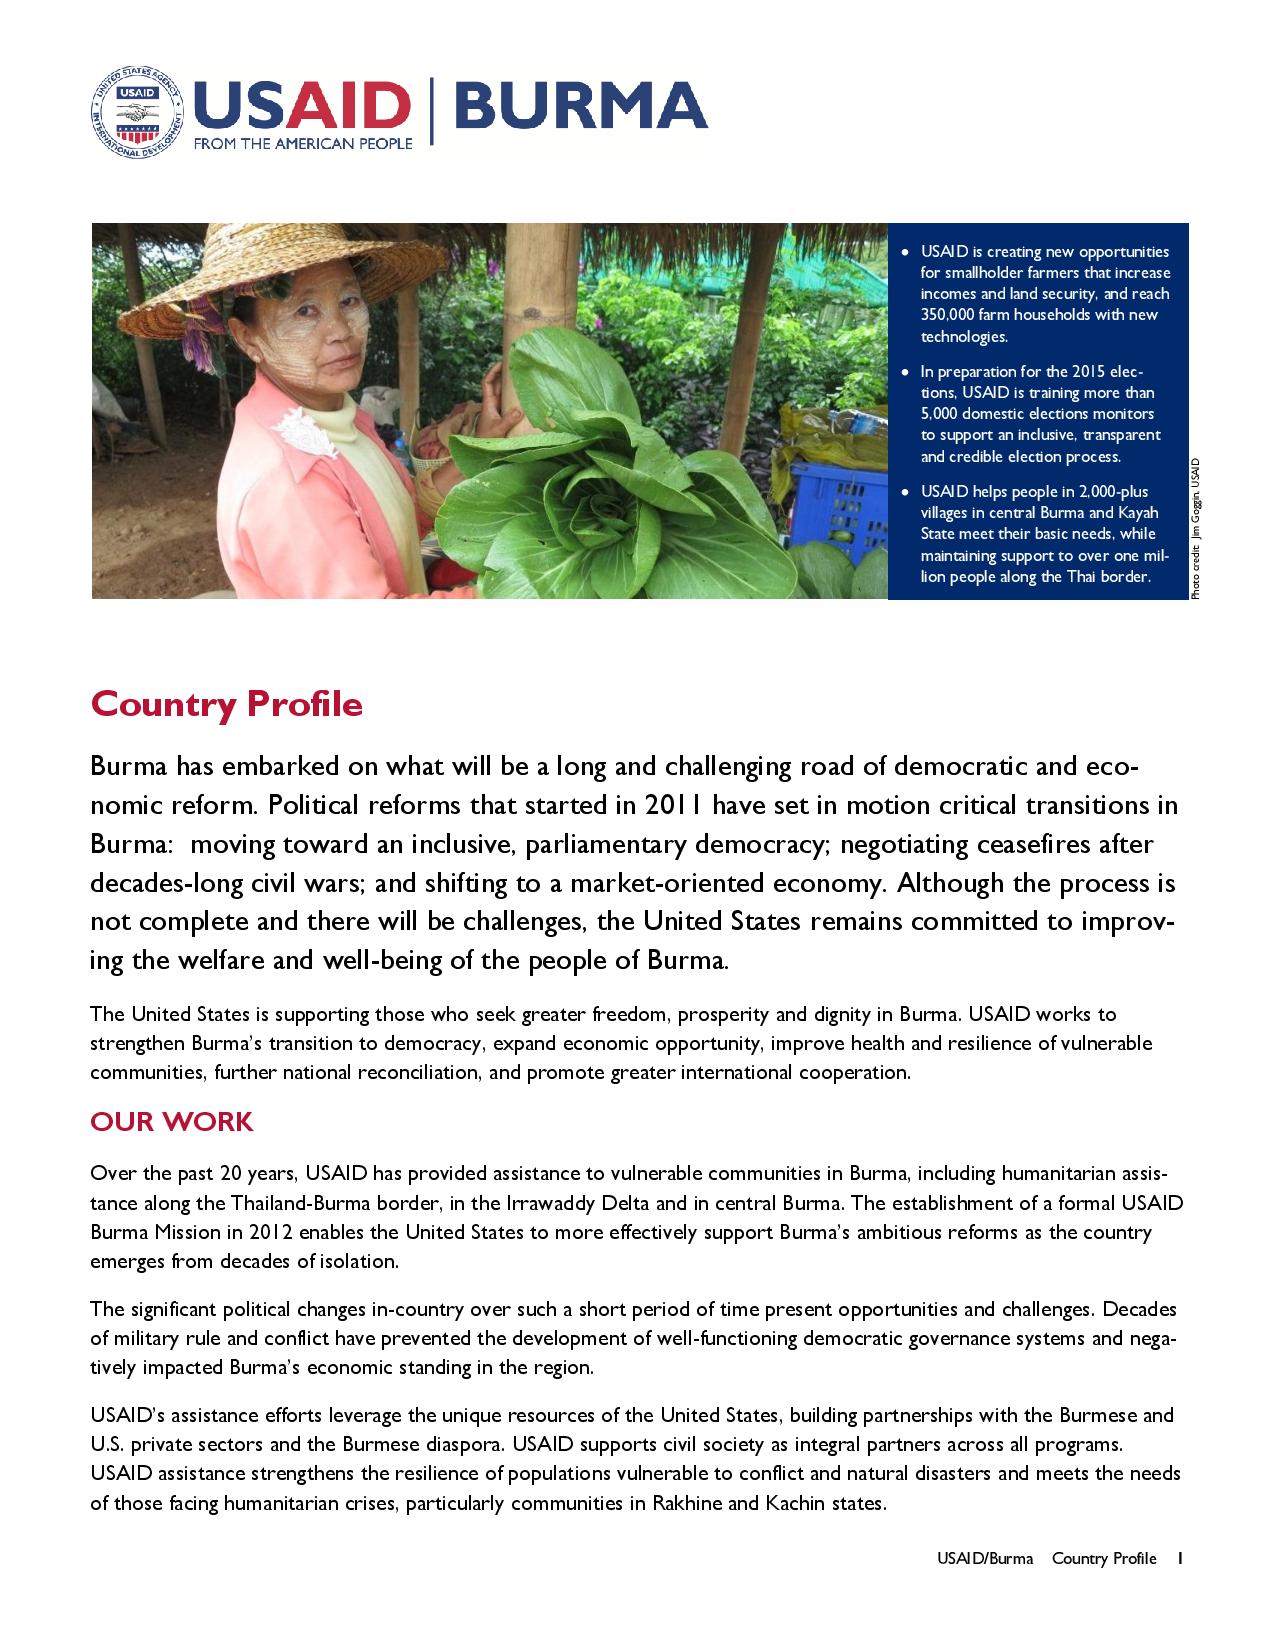 Burma Country Profile 2015